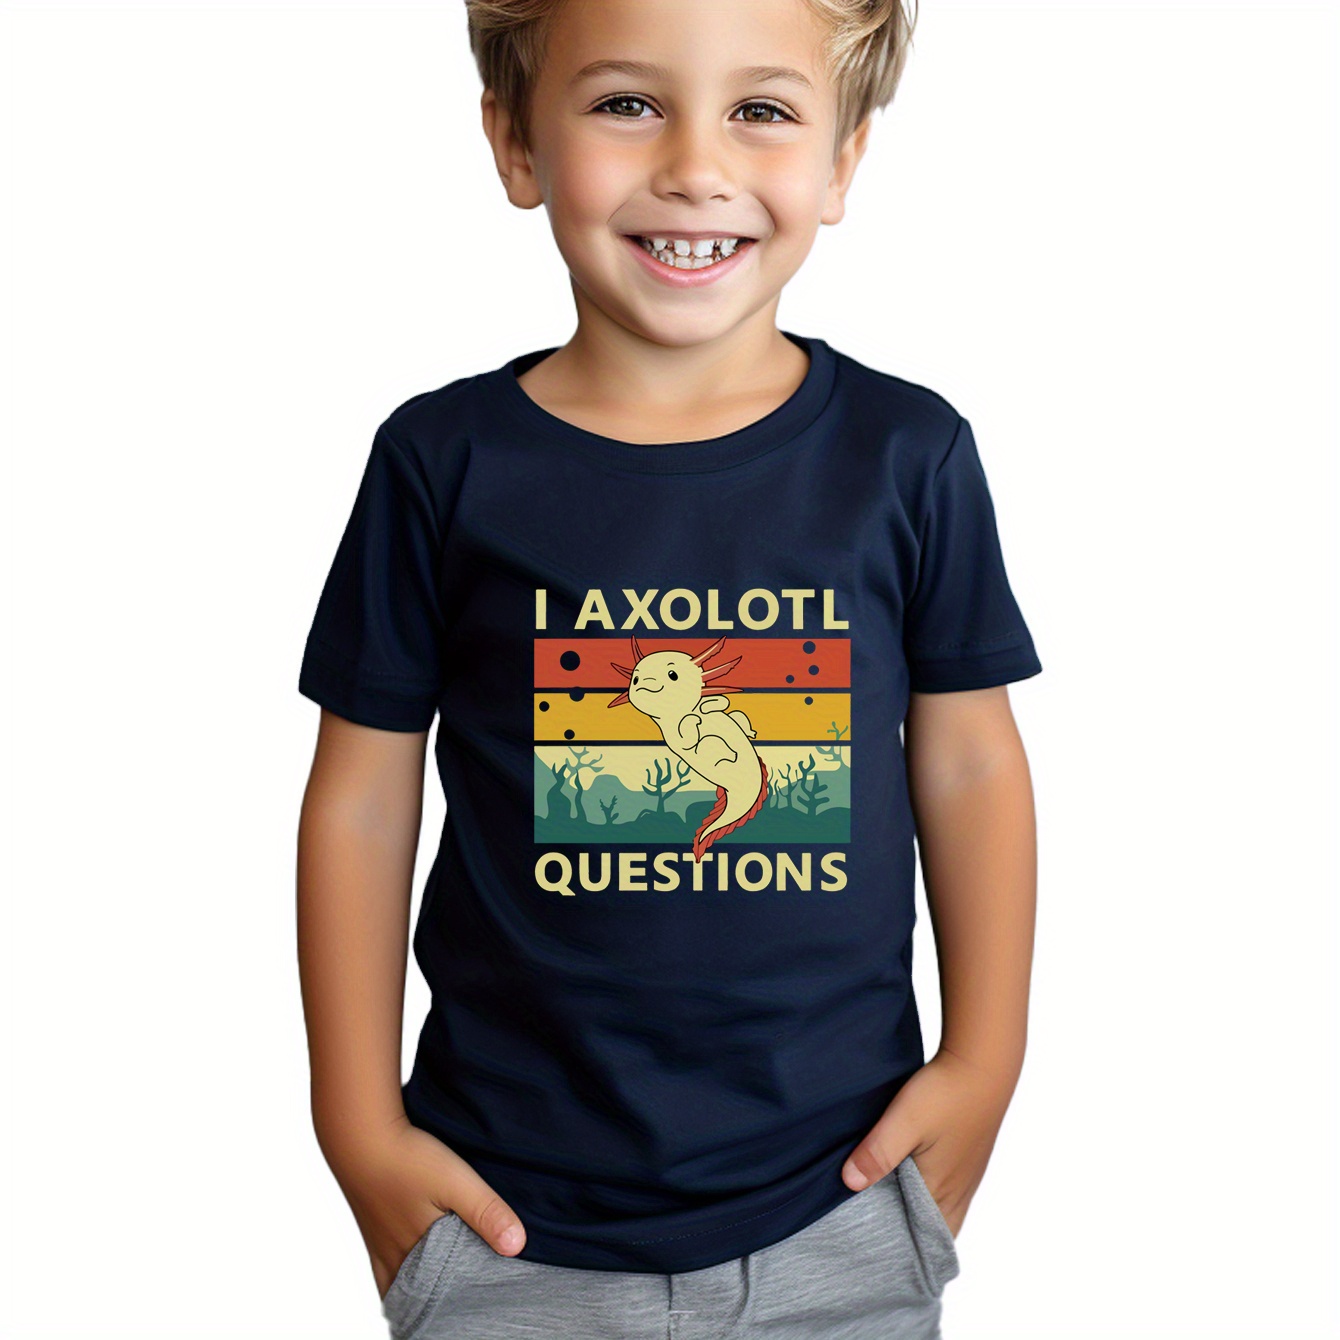 

I Axolotl Question Print Boy's T-shirt, Kids Casual Short Sleeve Breathable Comfortable Summer Outdoor Top